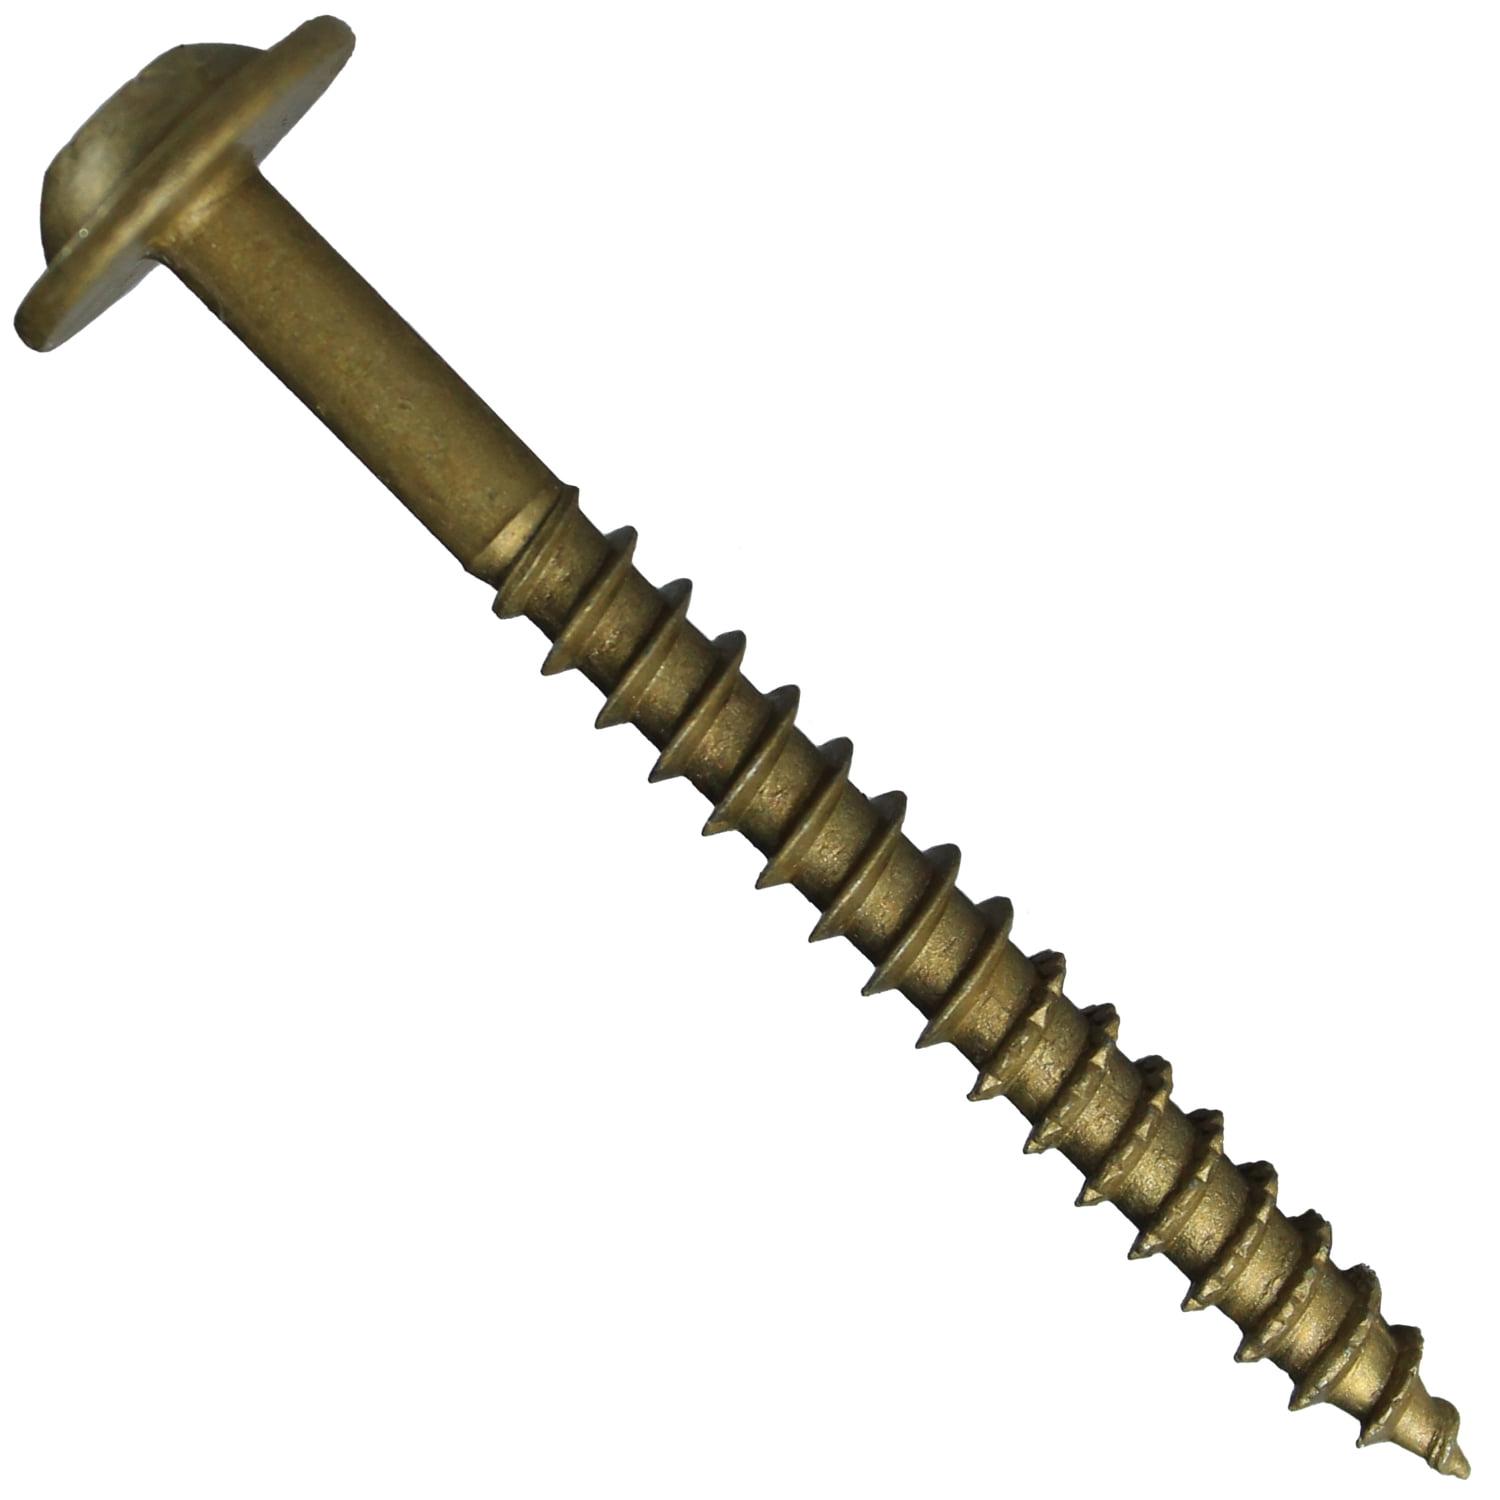 Hardwood screws